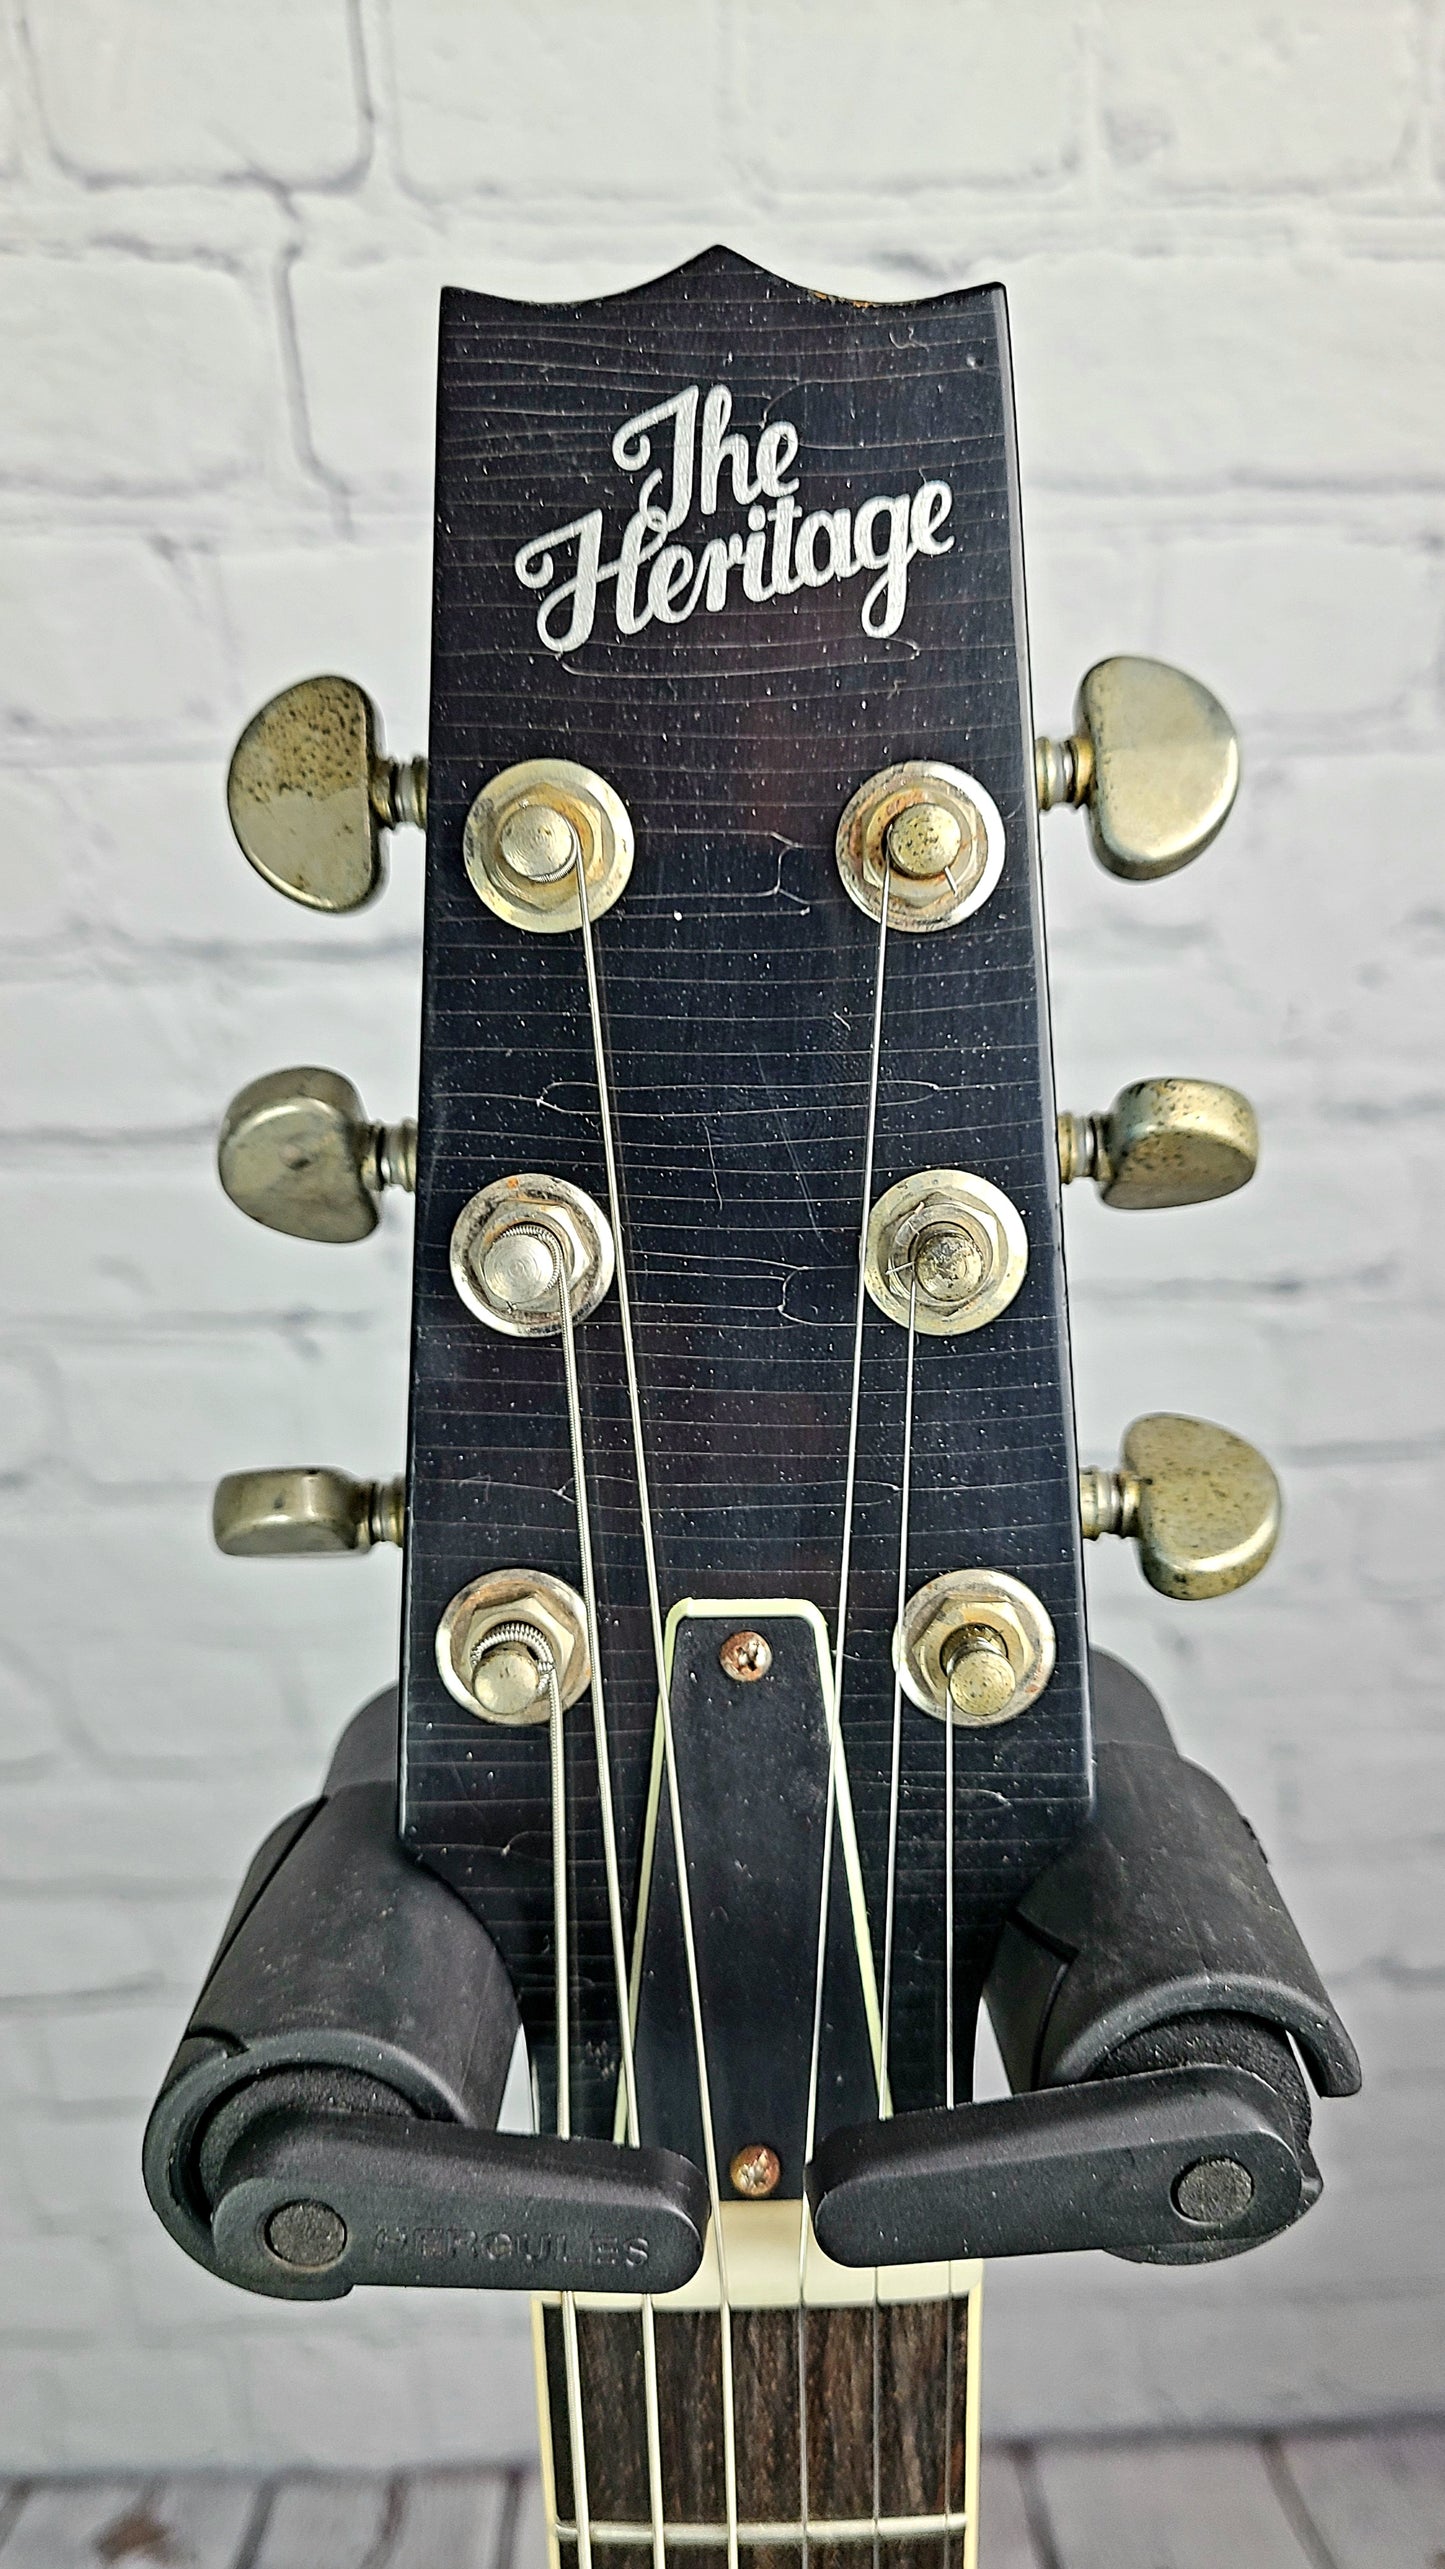 Heritage Guitars H-535 Artisan Aged Limited Edition Pelham Blue Semi-Hollow Electric Guitar